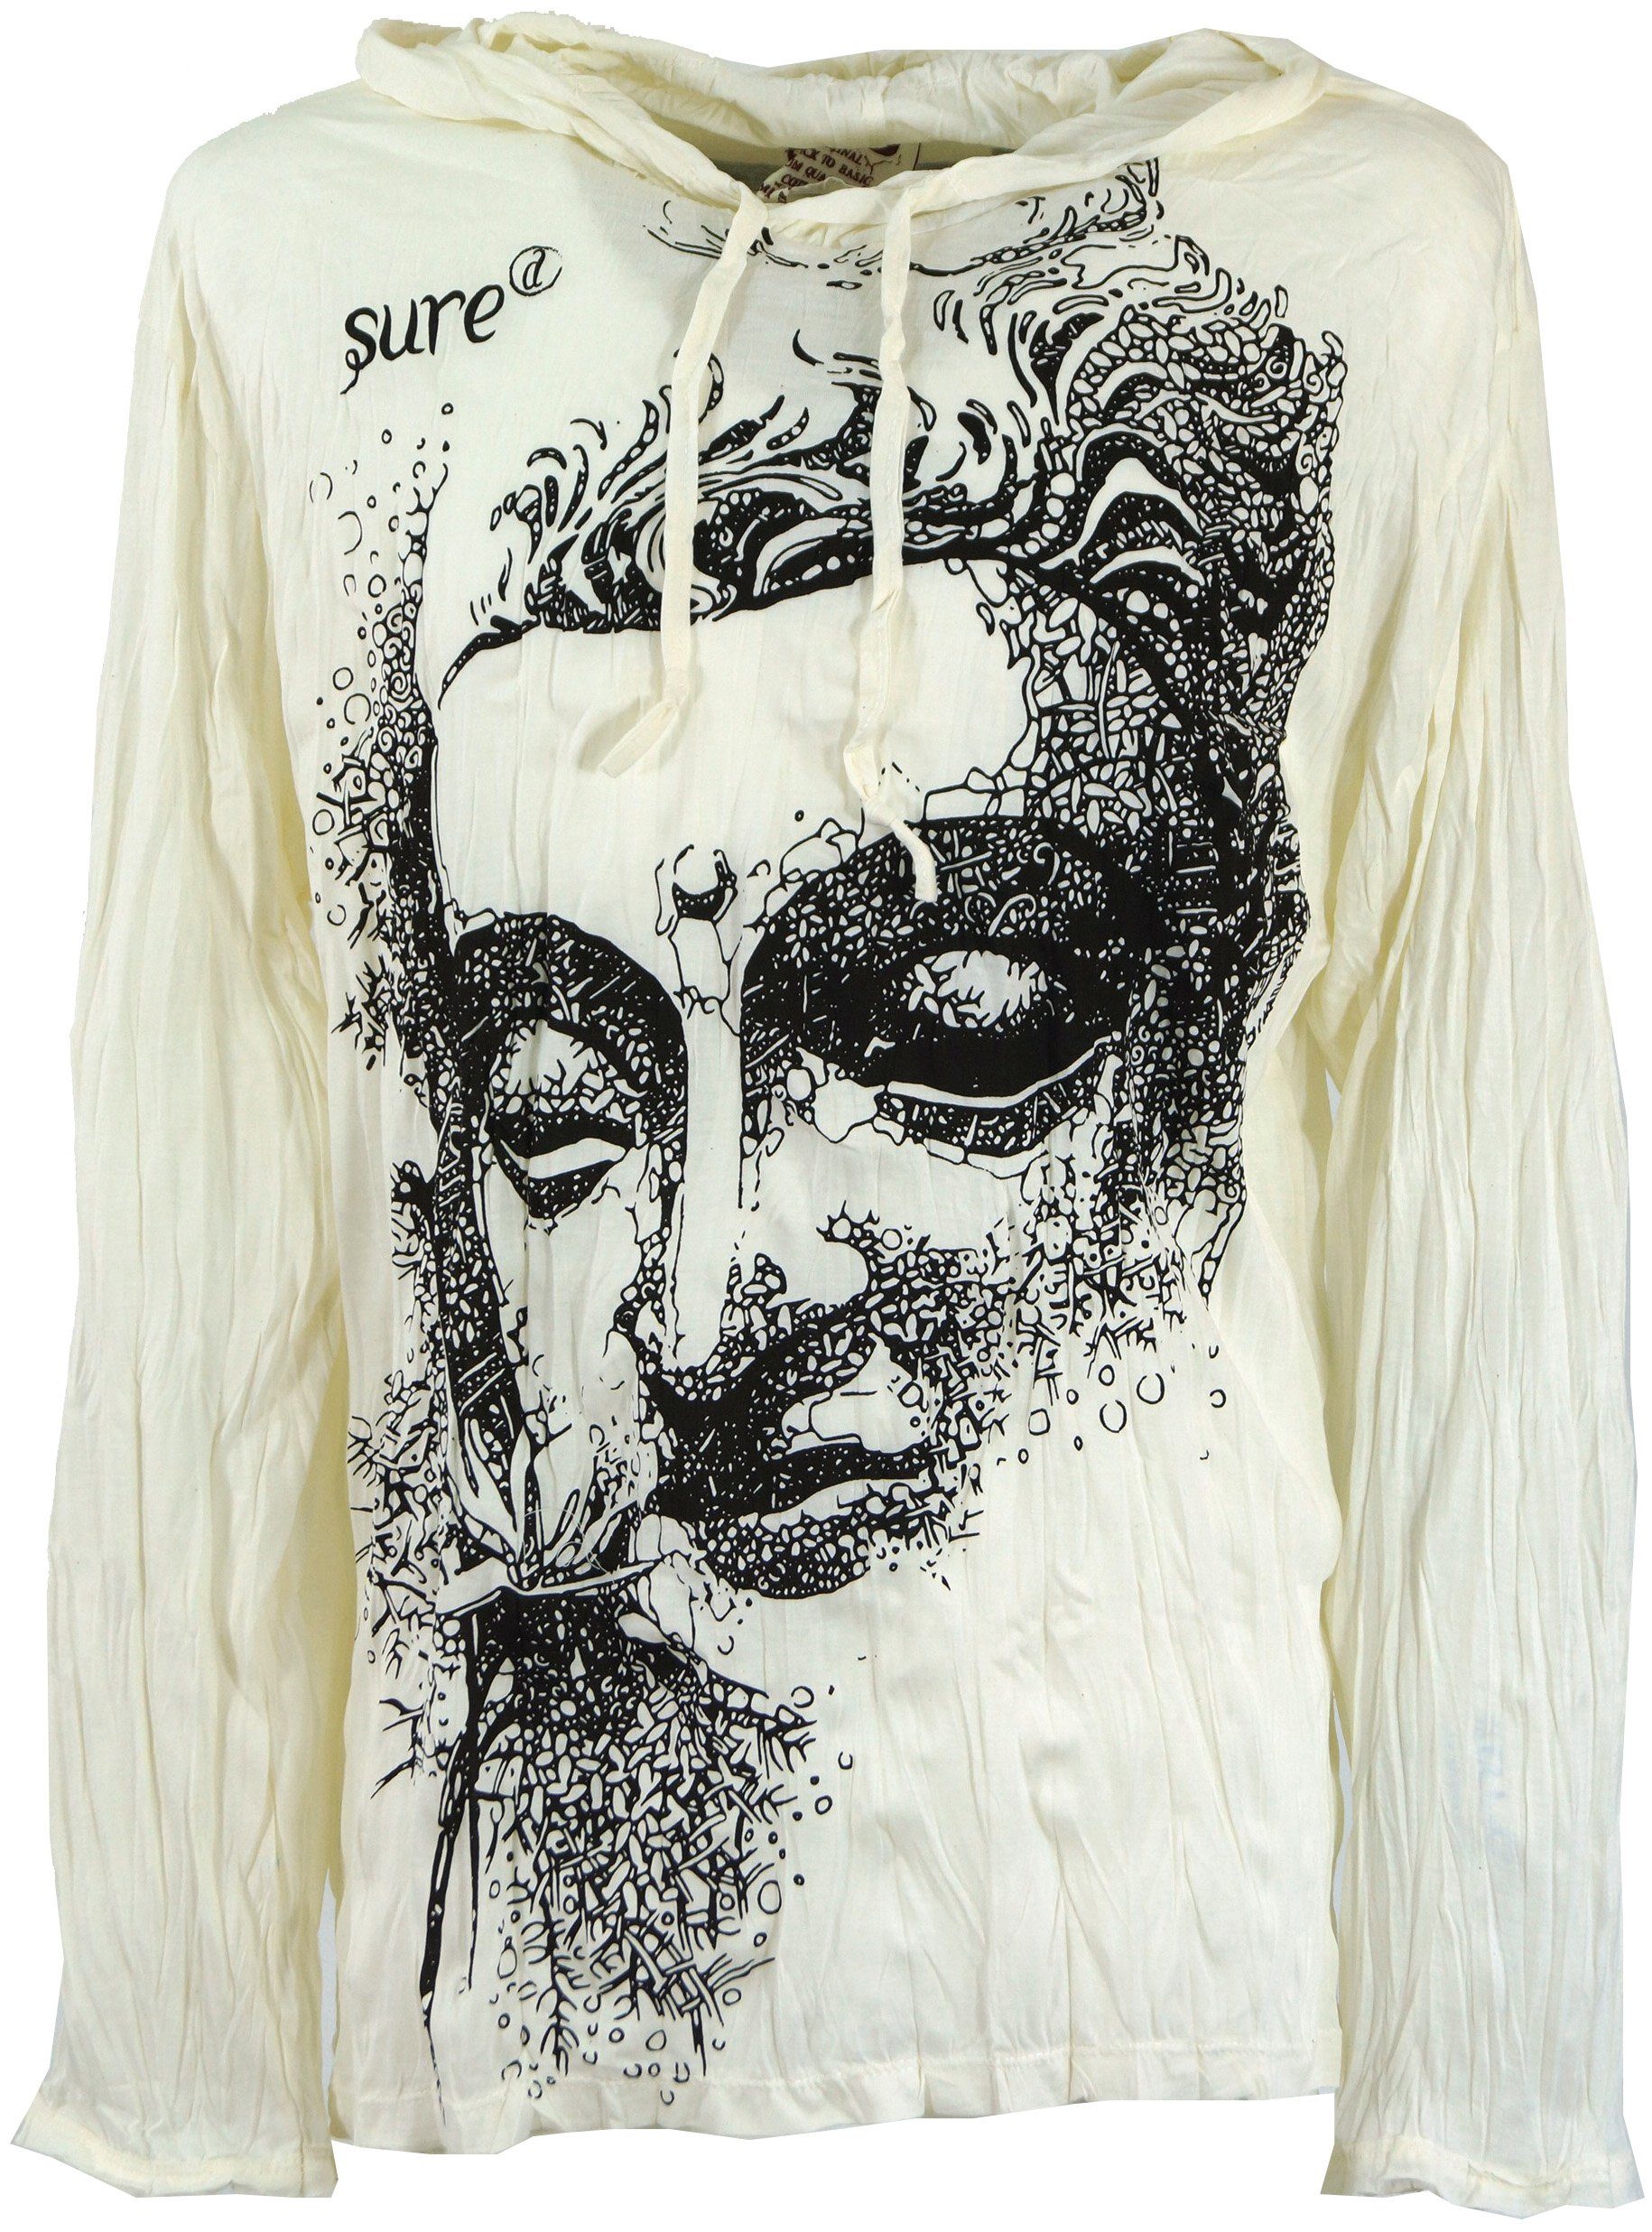 Guru-Shop T-Shirt Sure Langarmshirt, Kapuzenshirt Bekleidung Style, Goa weiß alternative Dreaming Festival, Buddha